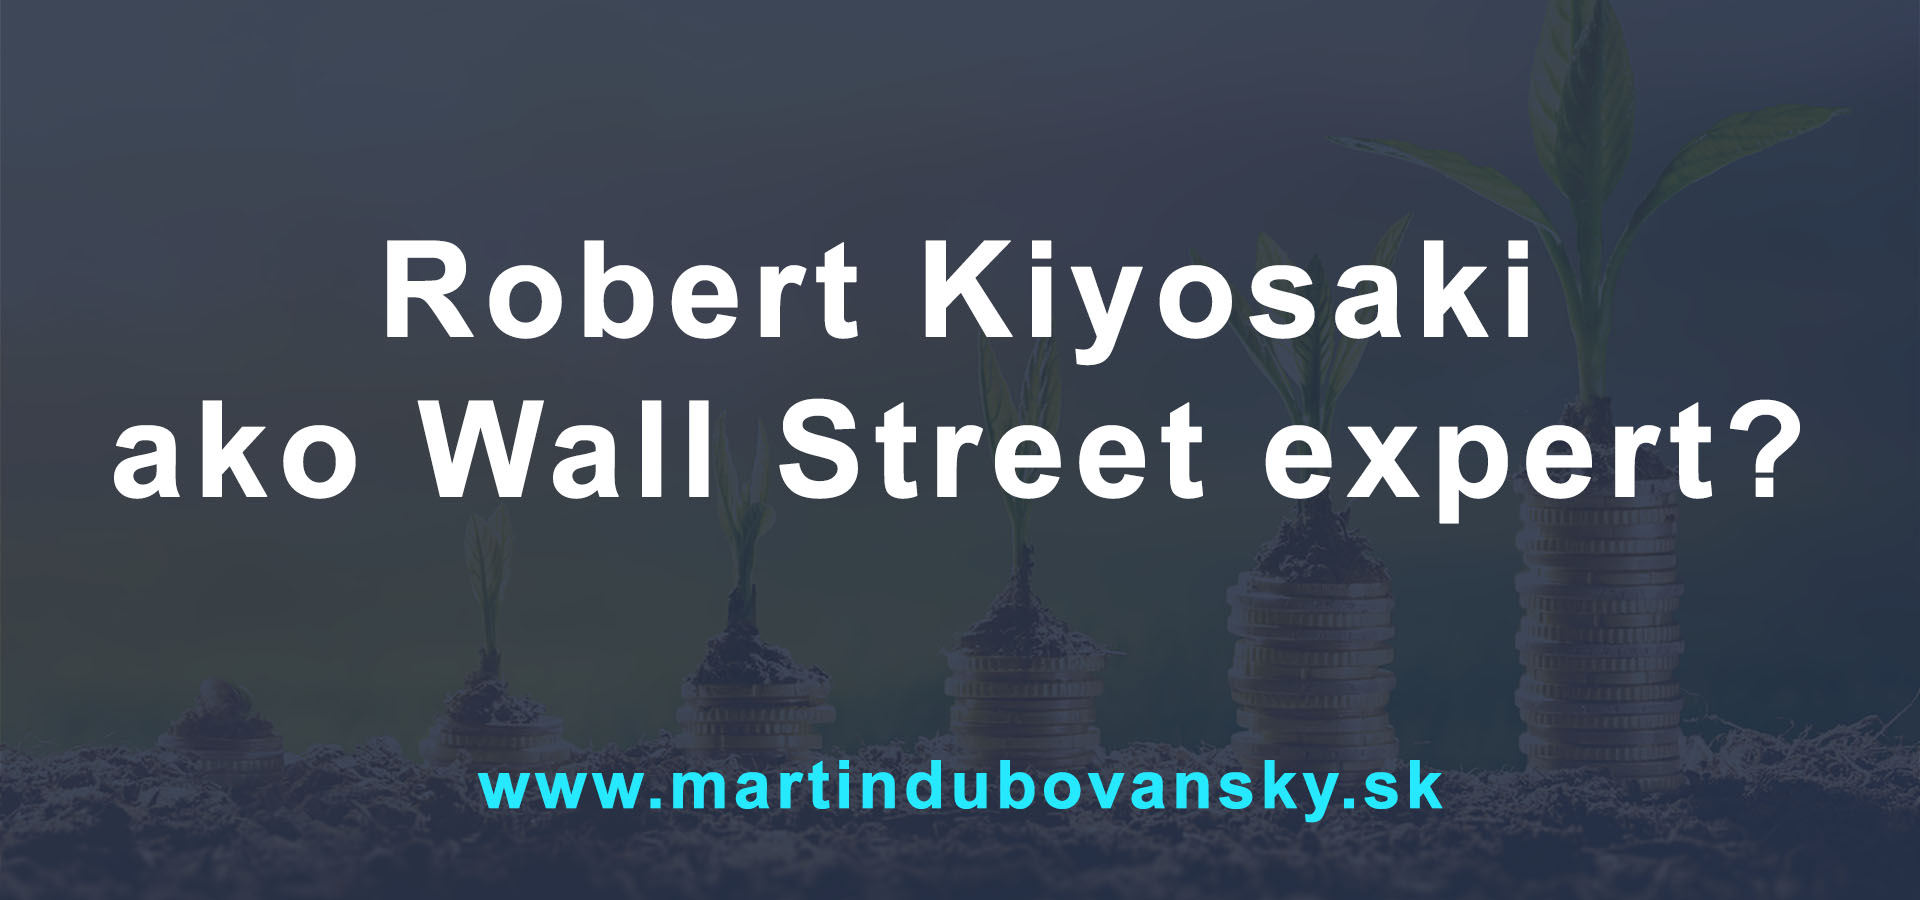 Robert Kiyosaki ako Wall Street expert?